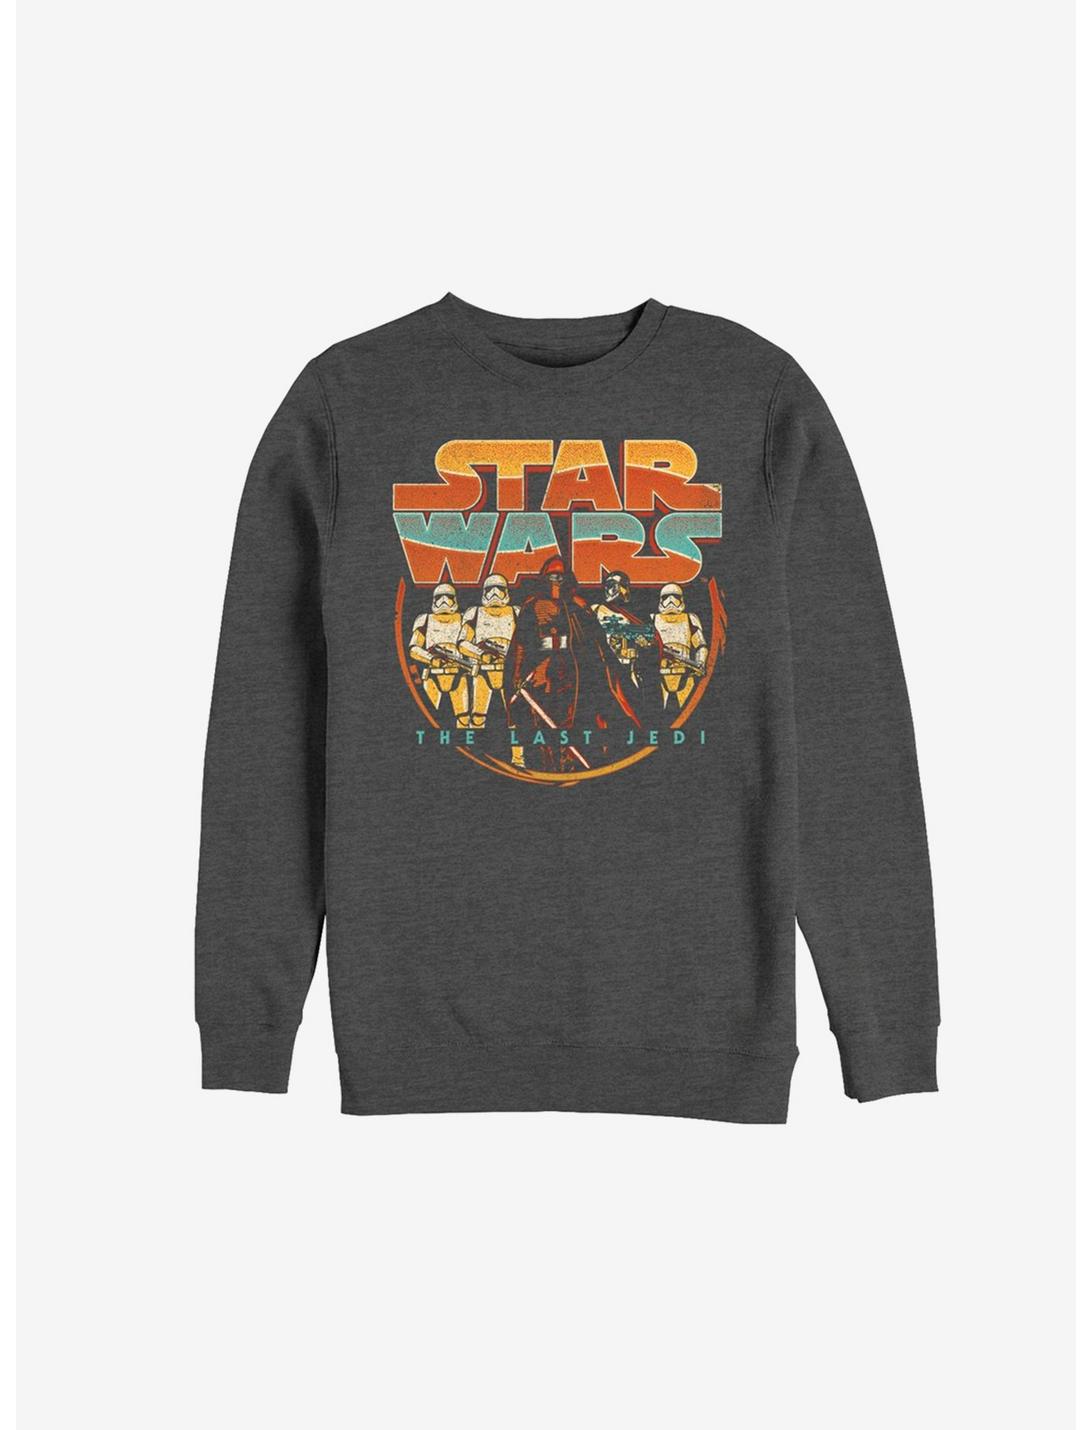 Star Wars Episode VIII The Last Jedi Retro Style Sweatshirt, CHAR HTR, hi-res